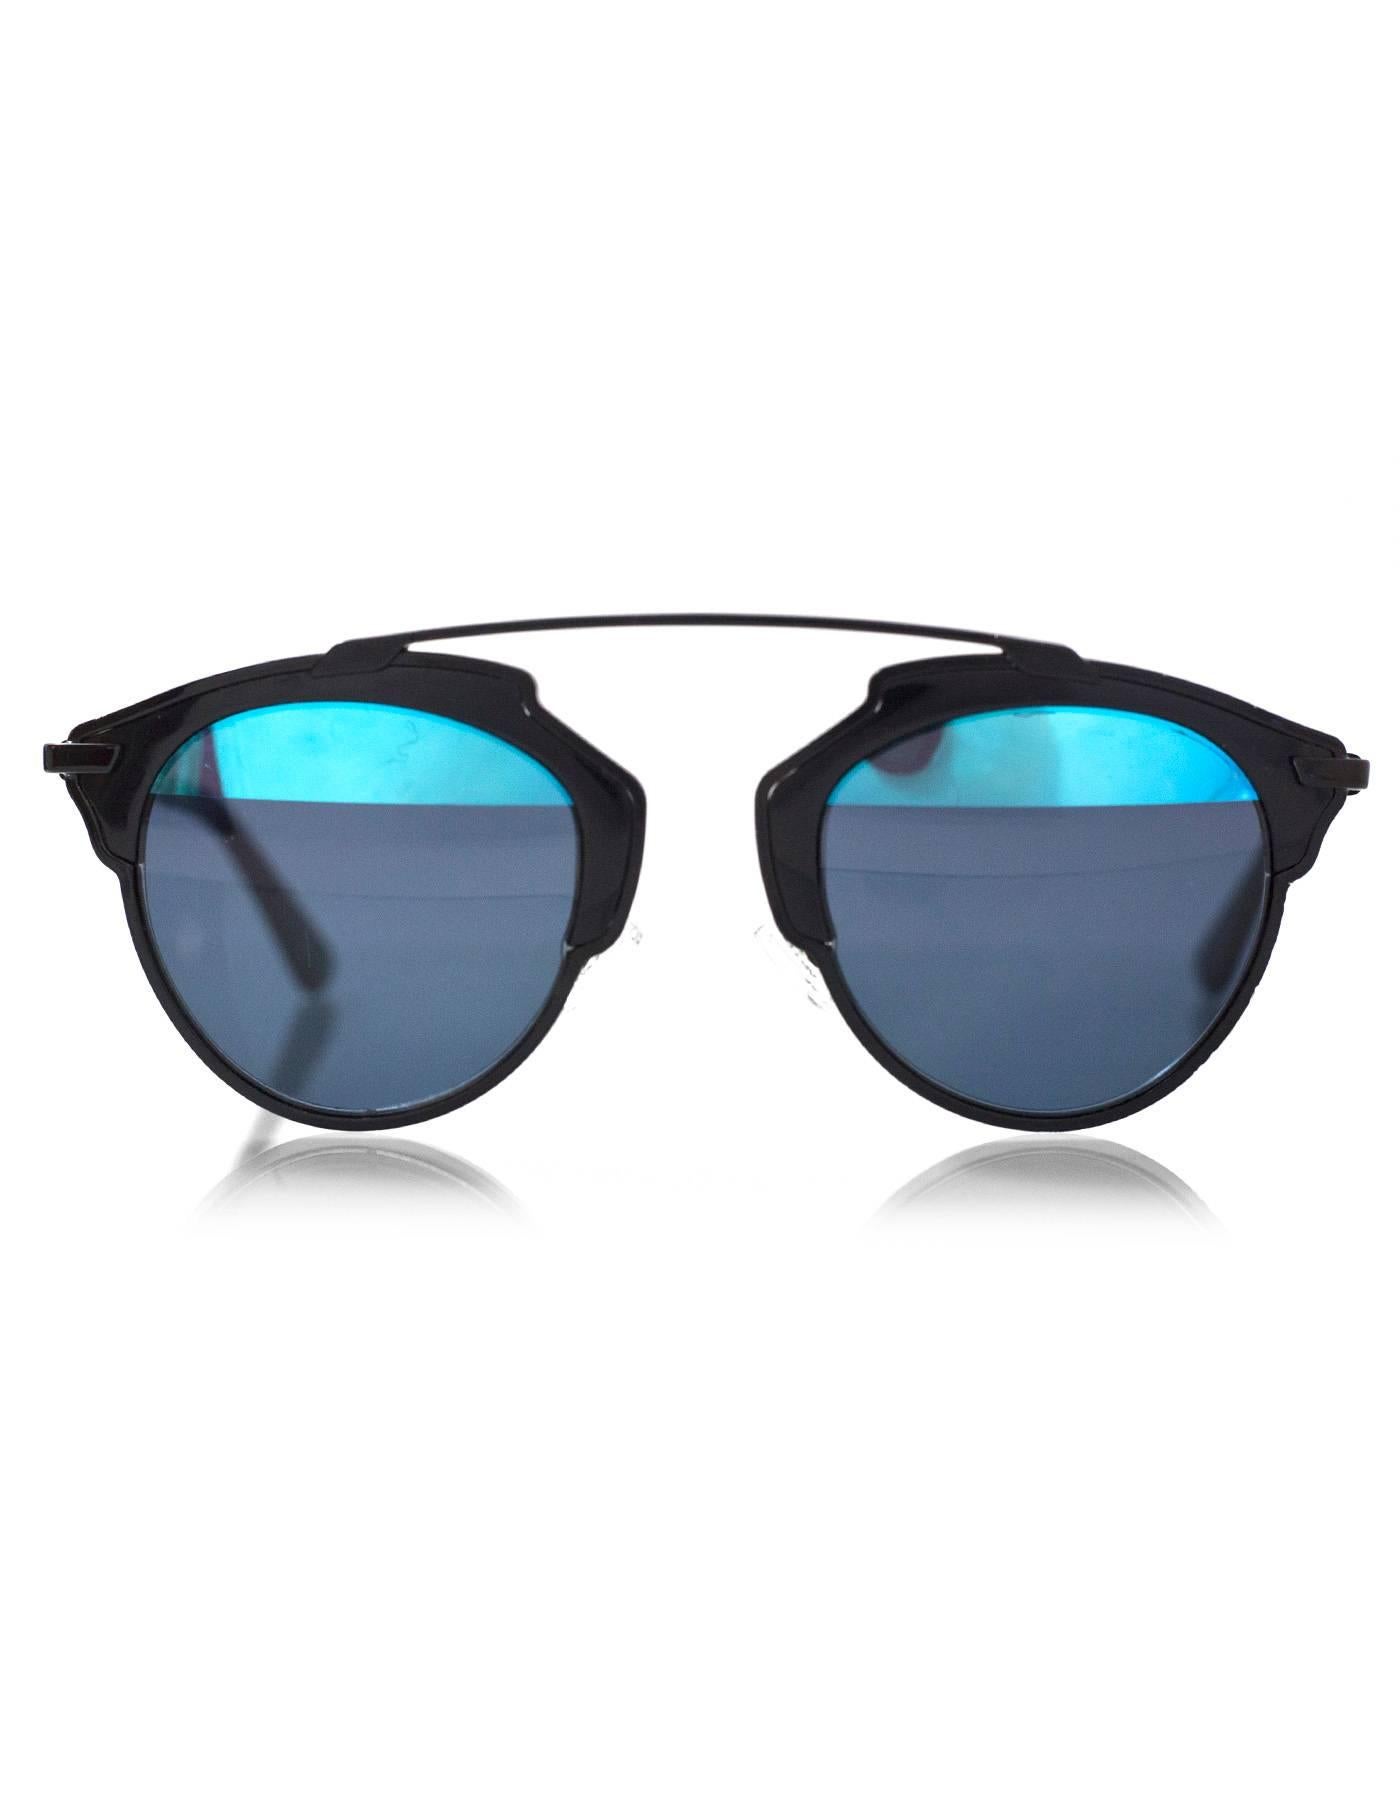 dior black and blue sunglasses